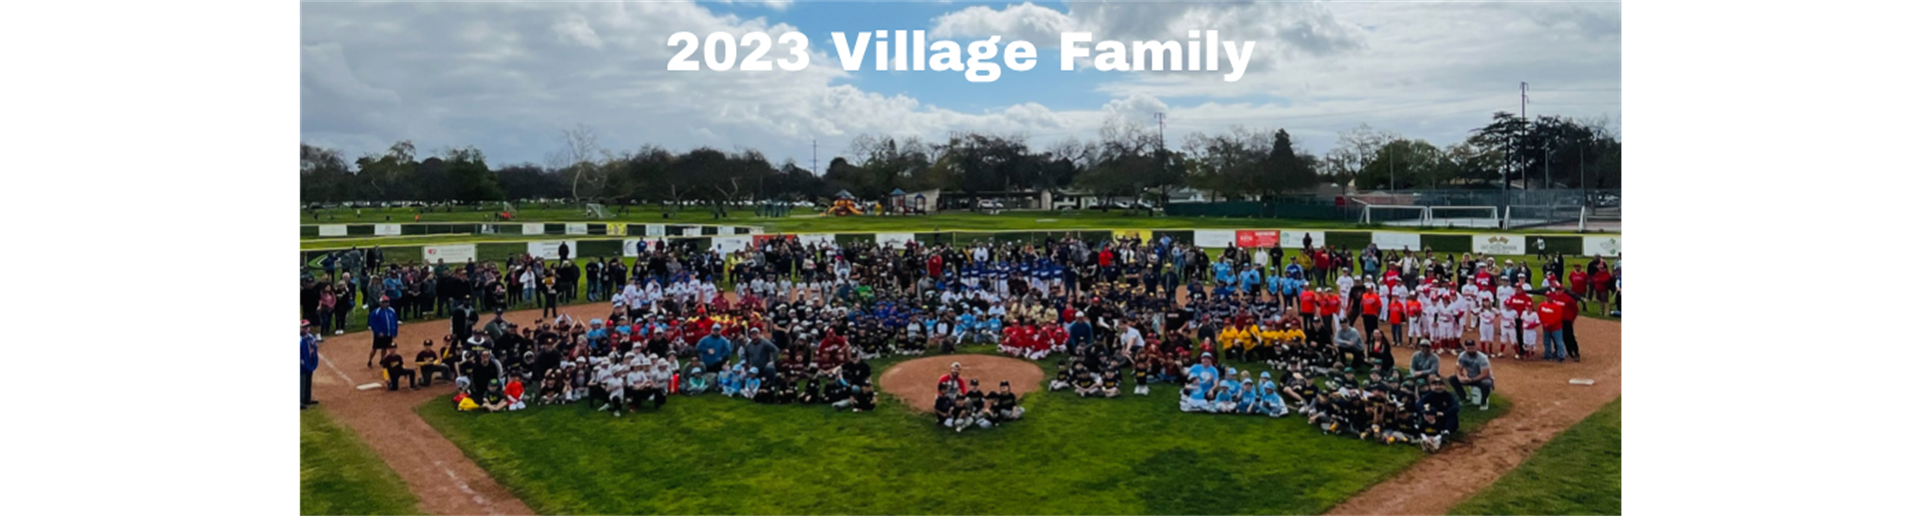 2023 Village Family